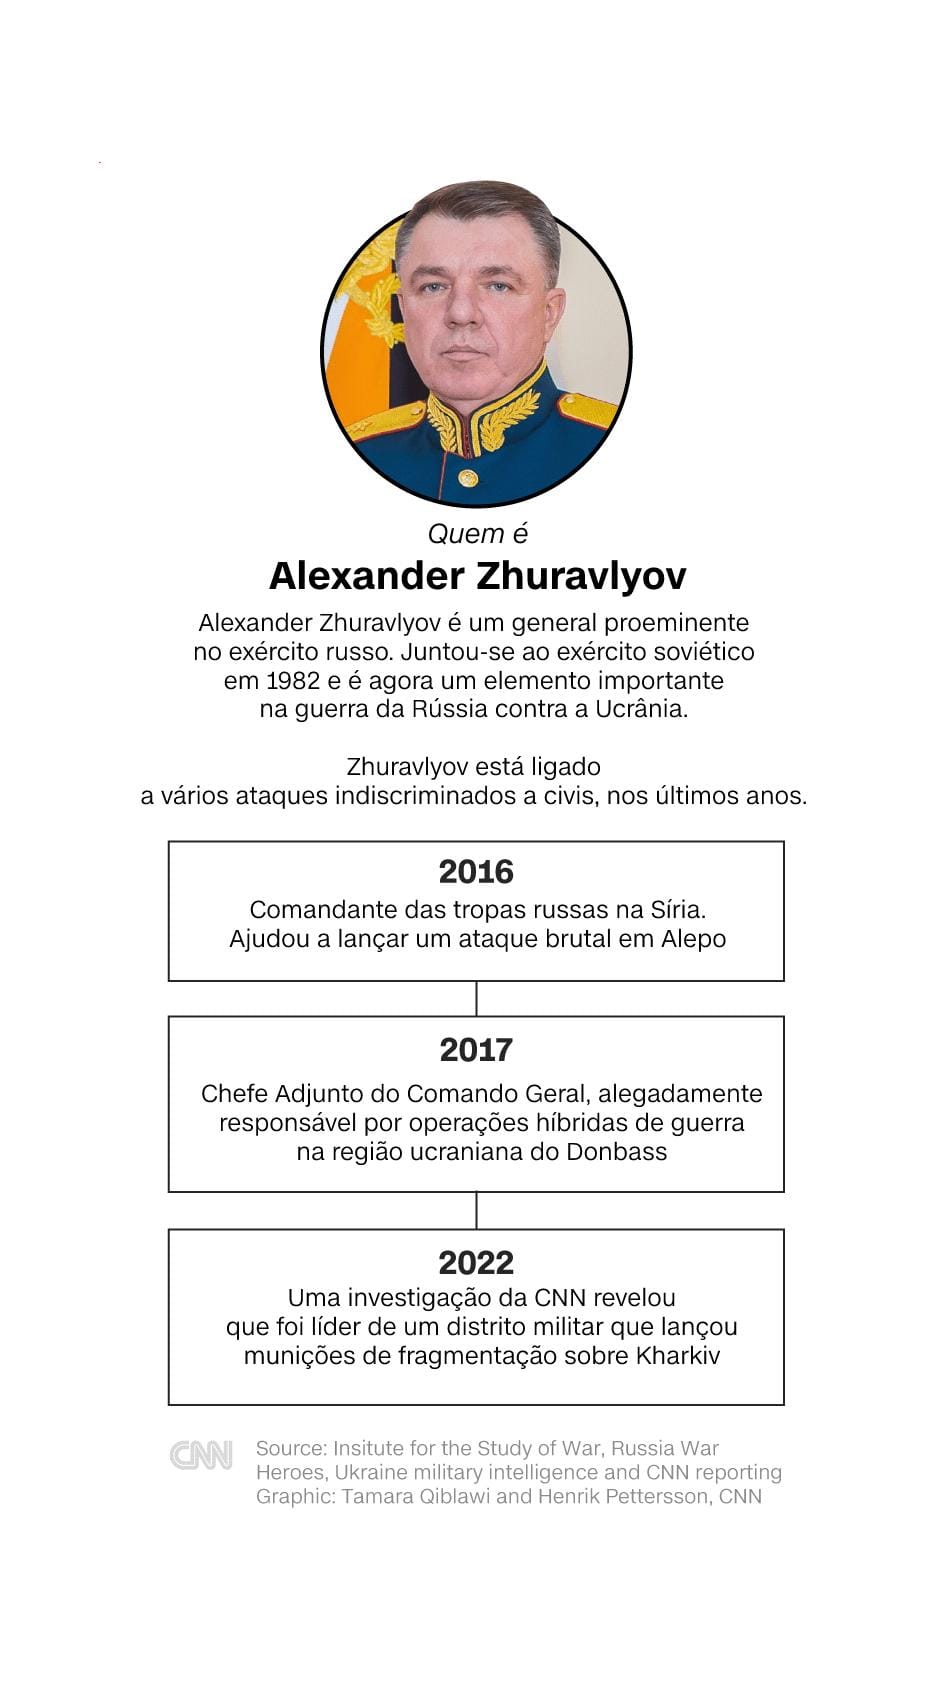 Quem é Alexander Zhuravlyov?